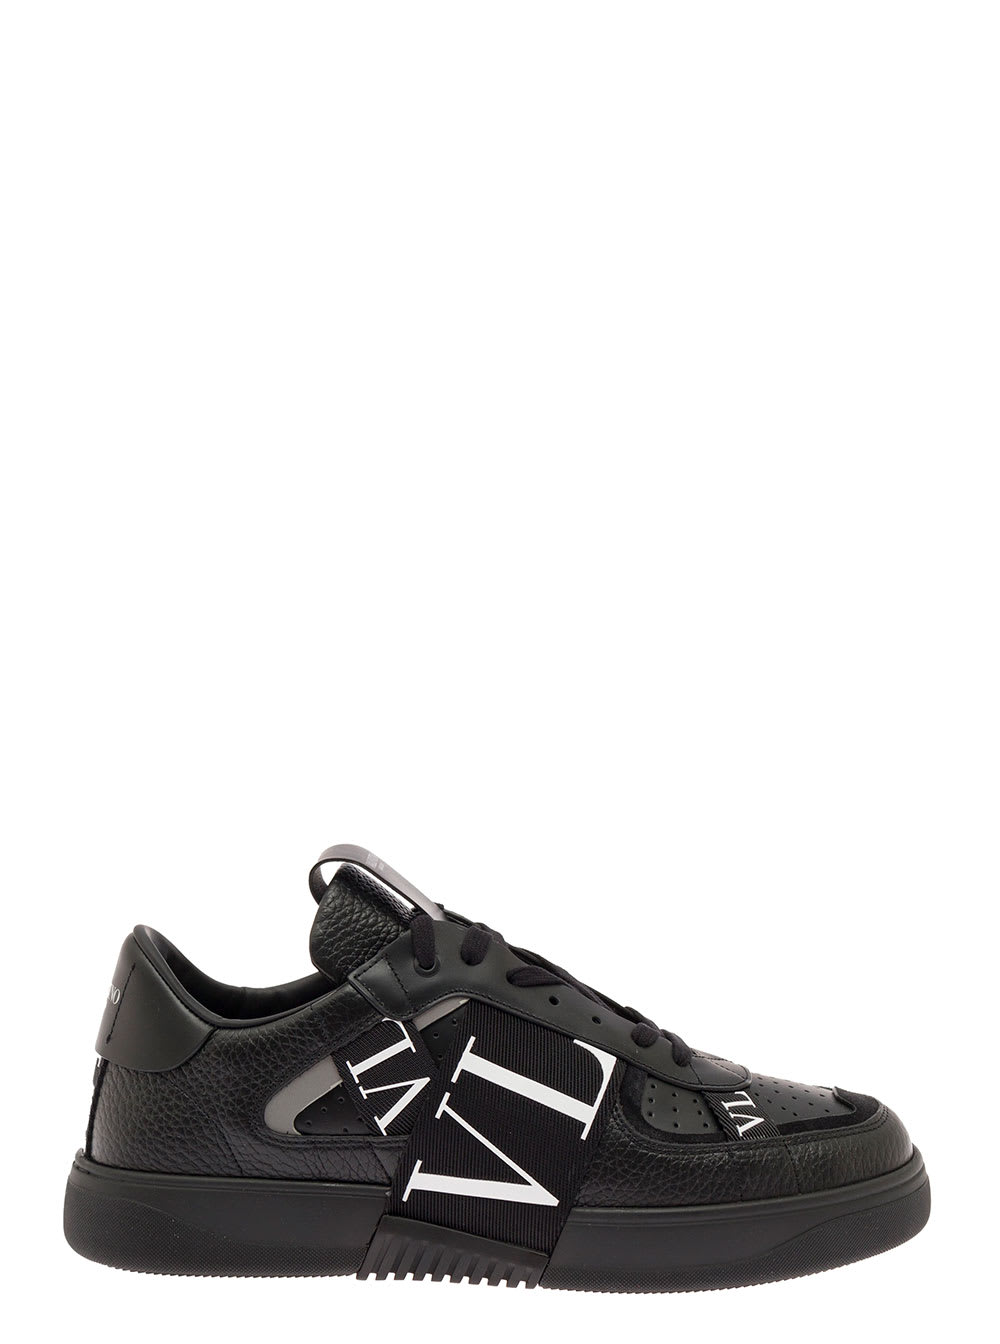 Black Leather Vltn Sneakers Man Valentino Garavani